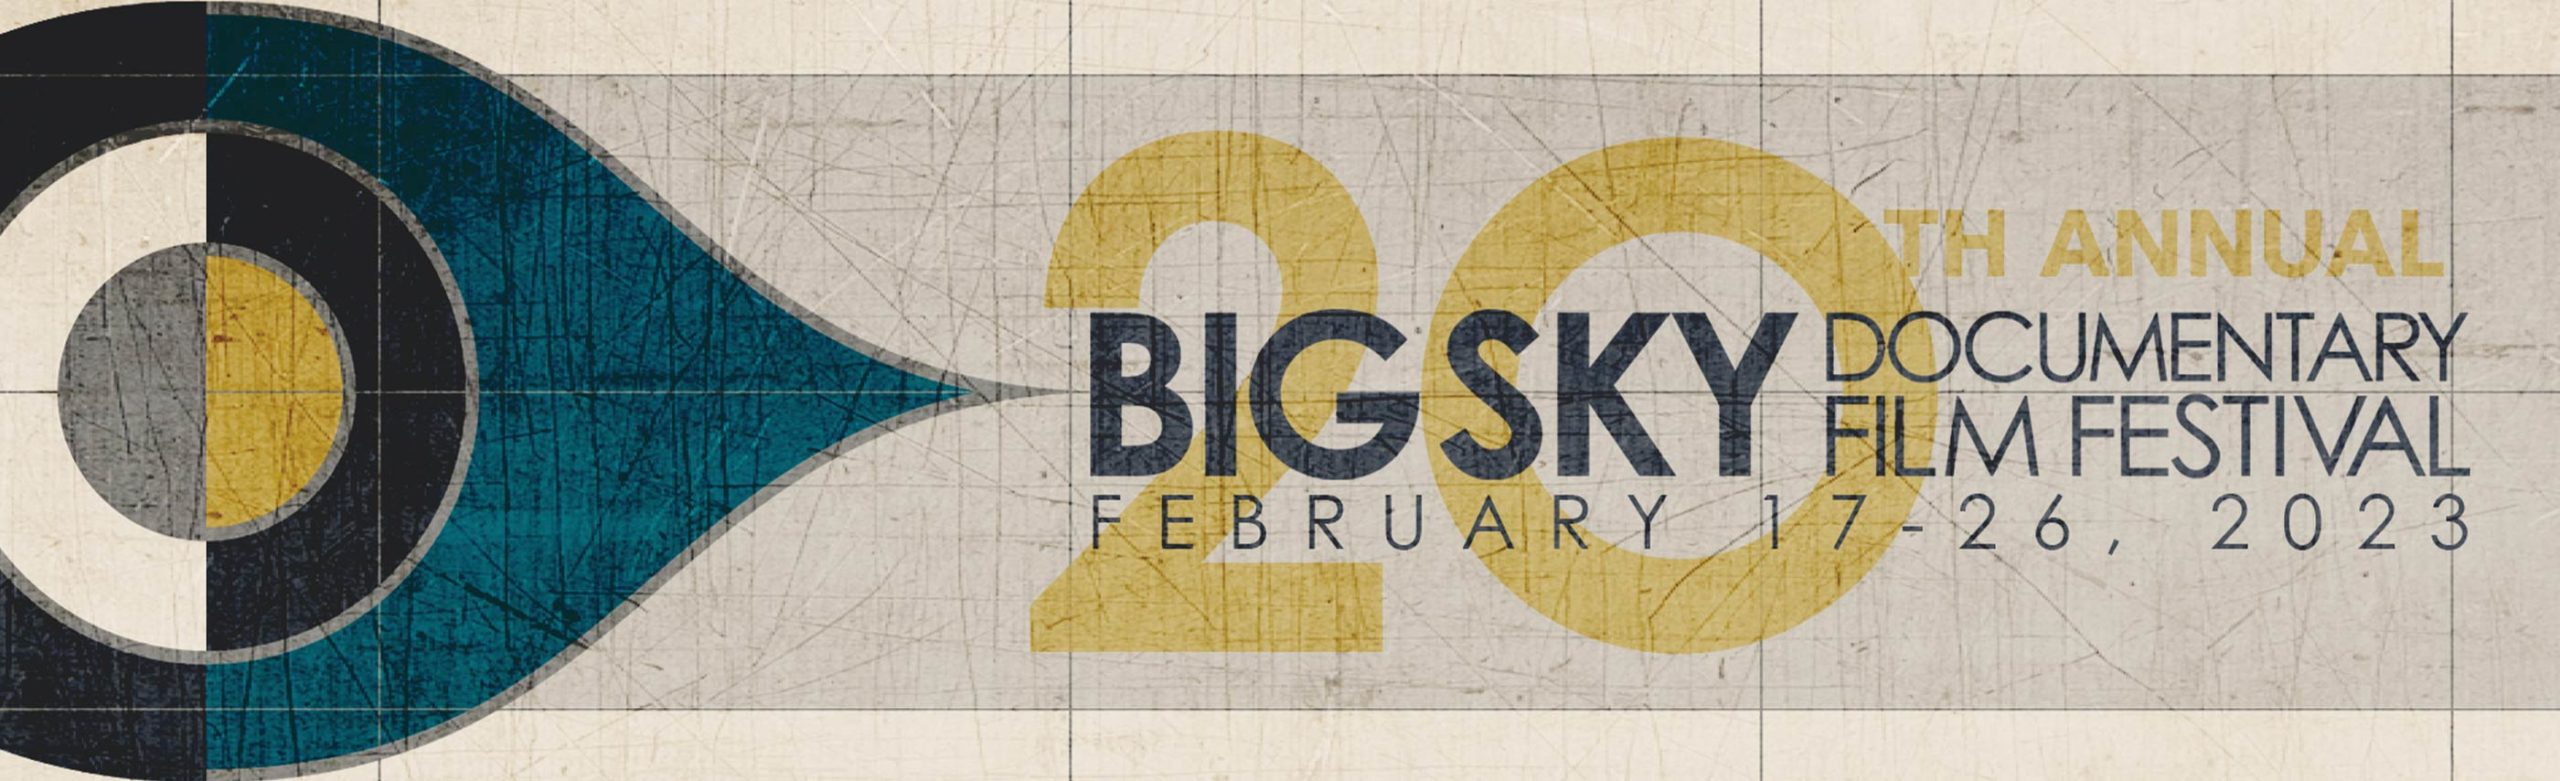 Big Sky Documentary Film Festival: Opening Night